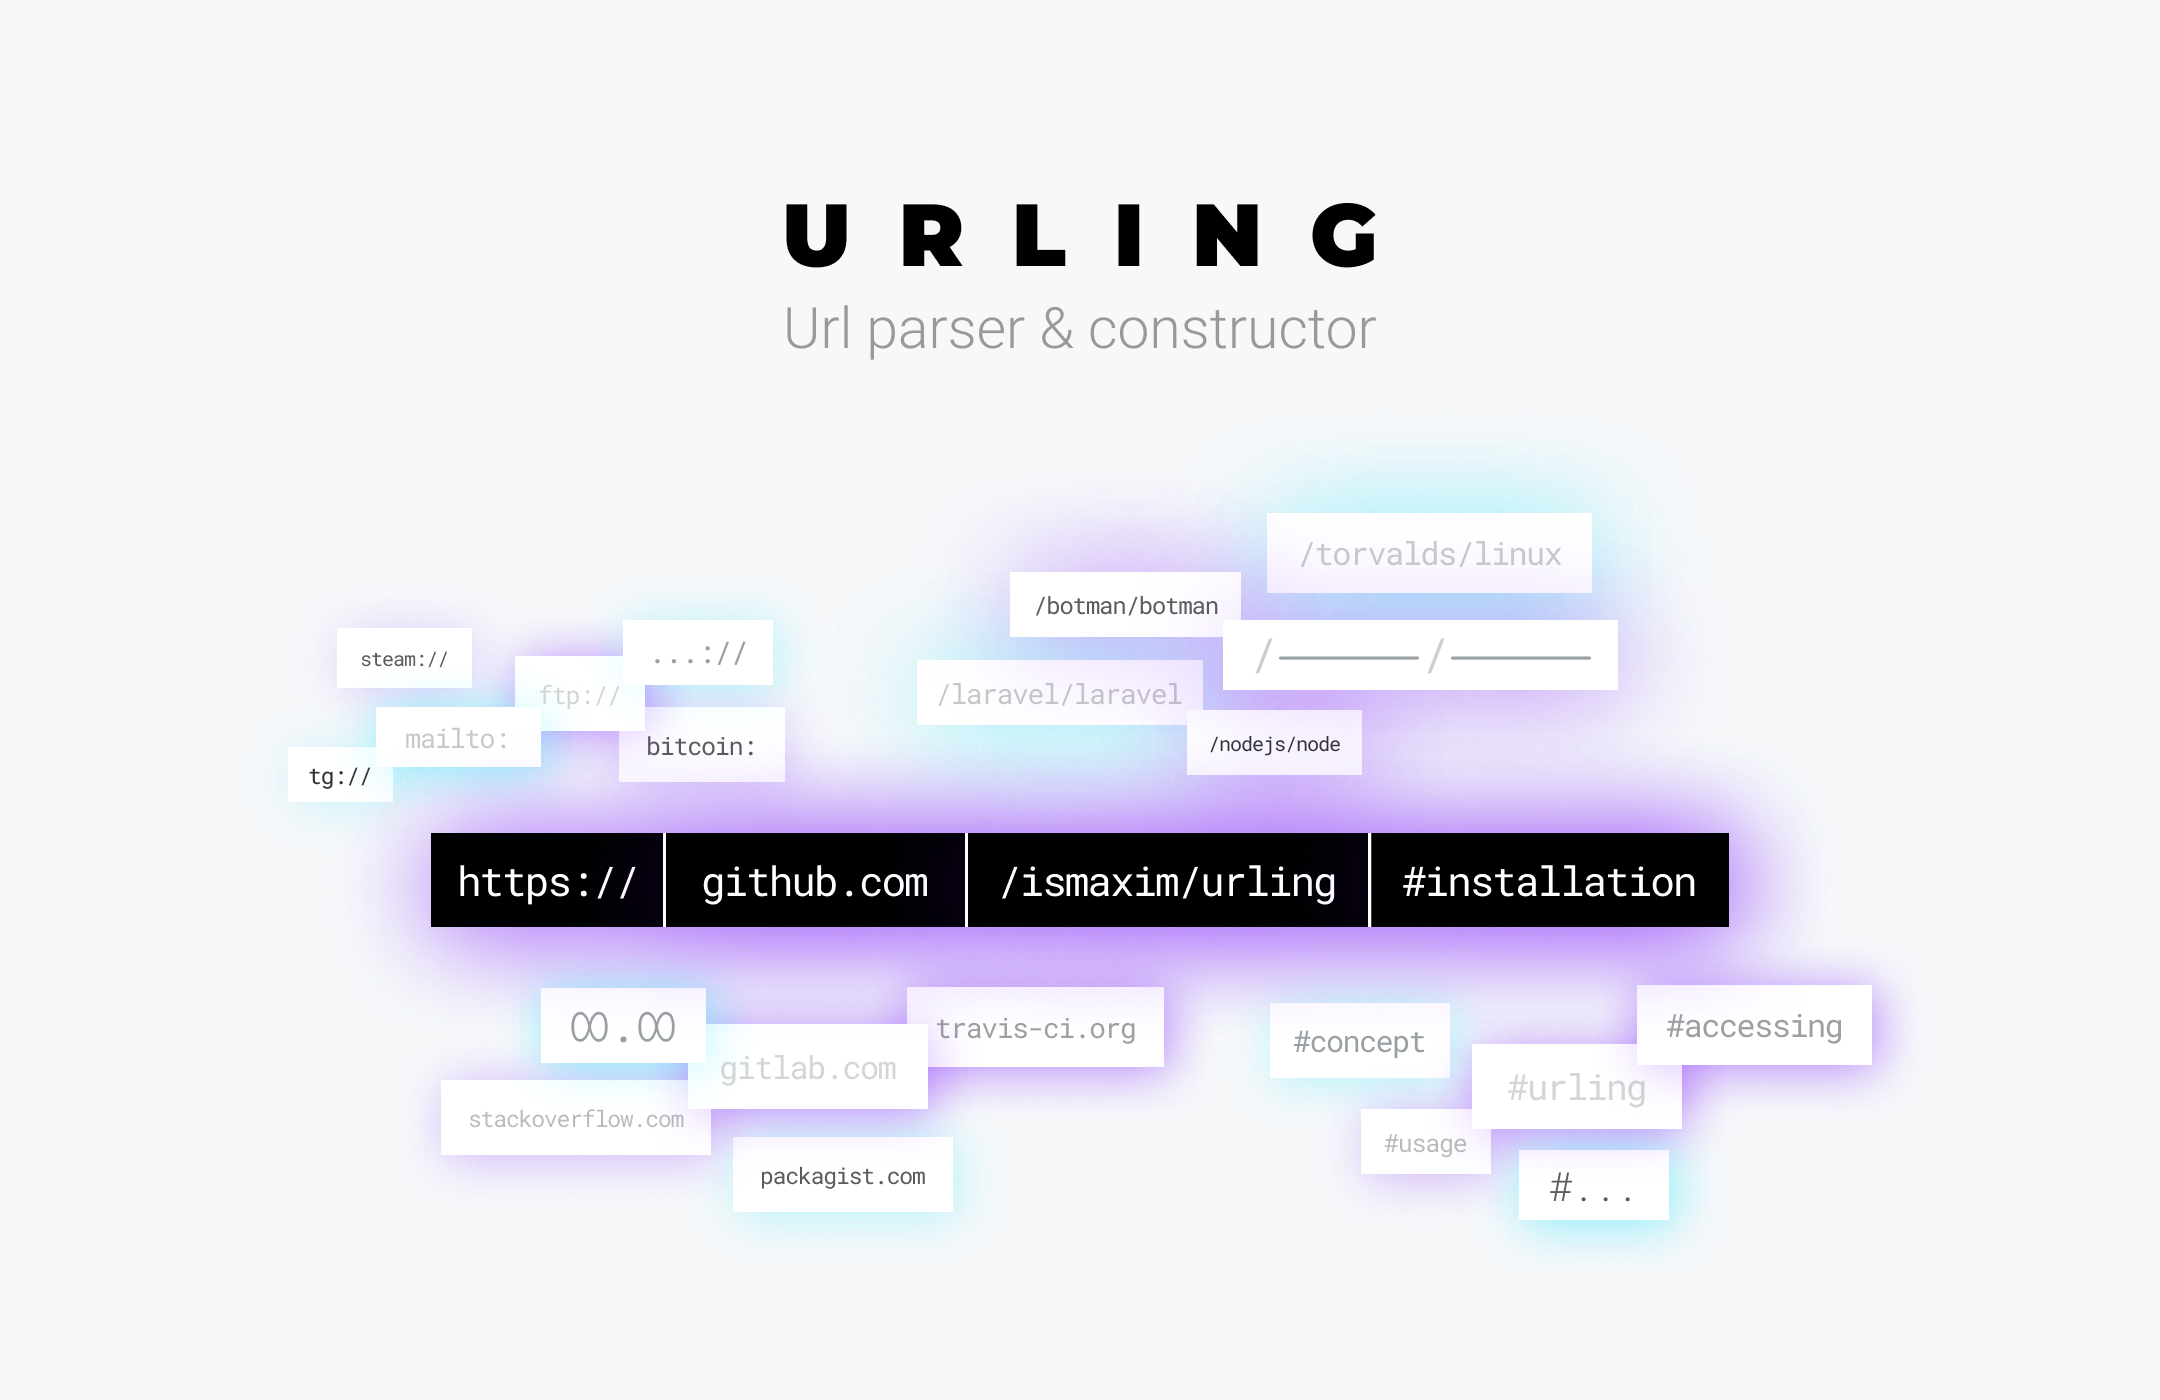 Urling - url parser & constructor